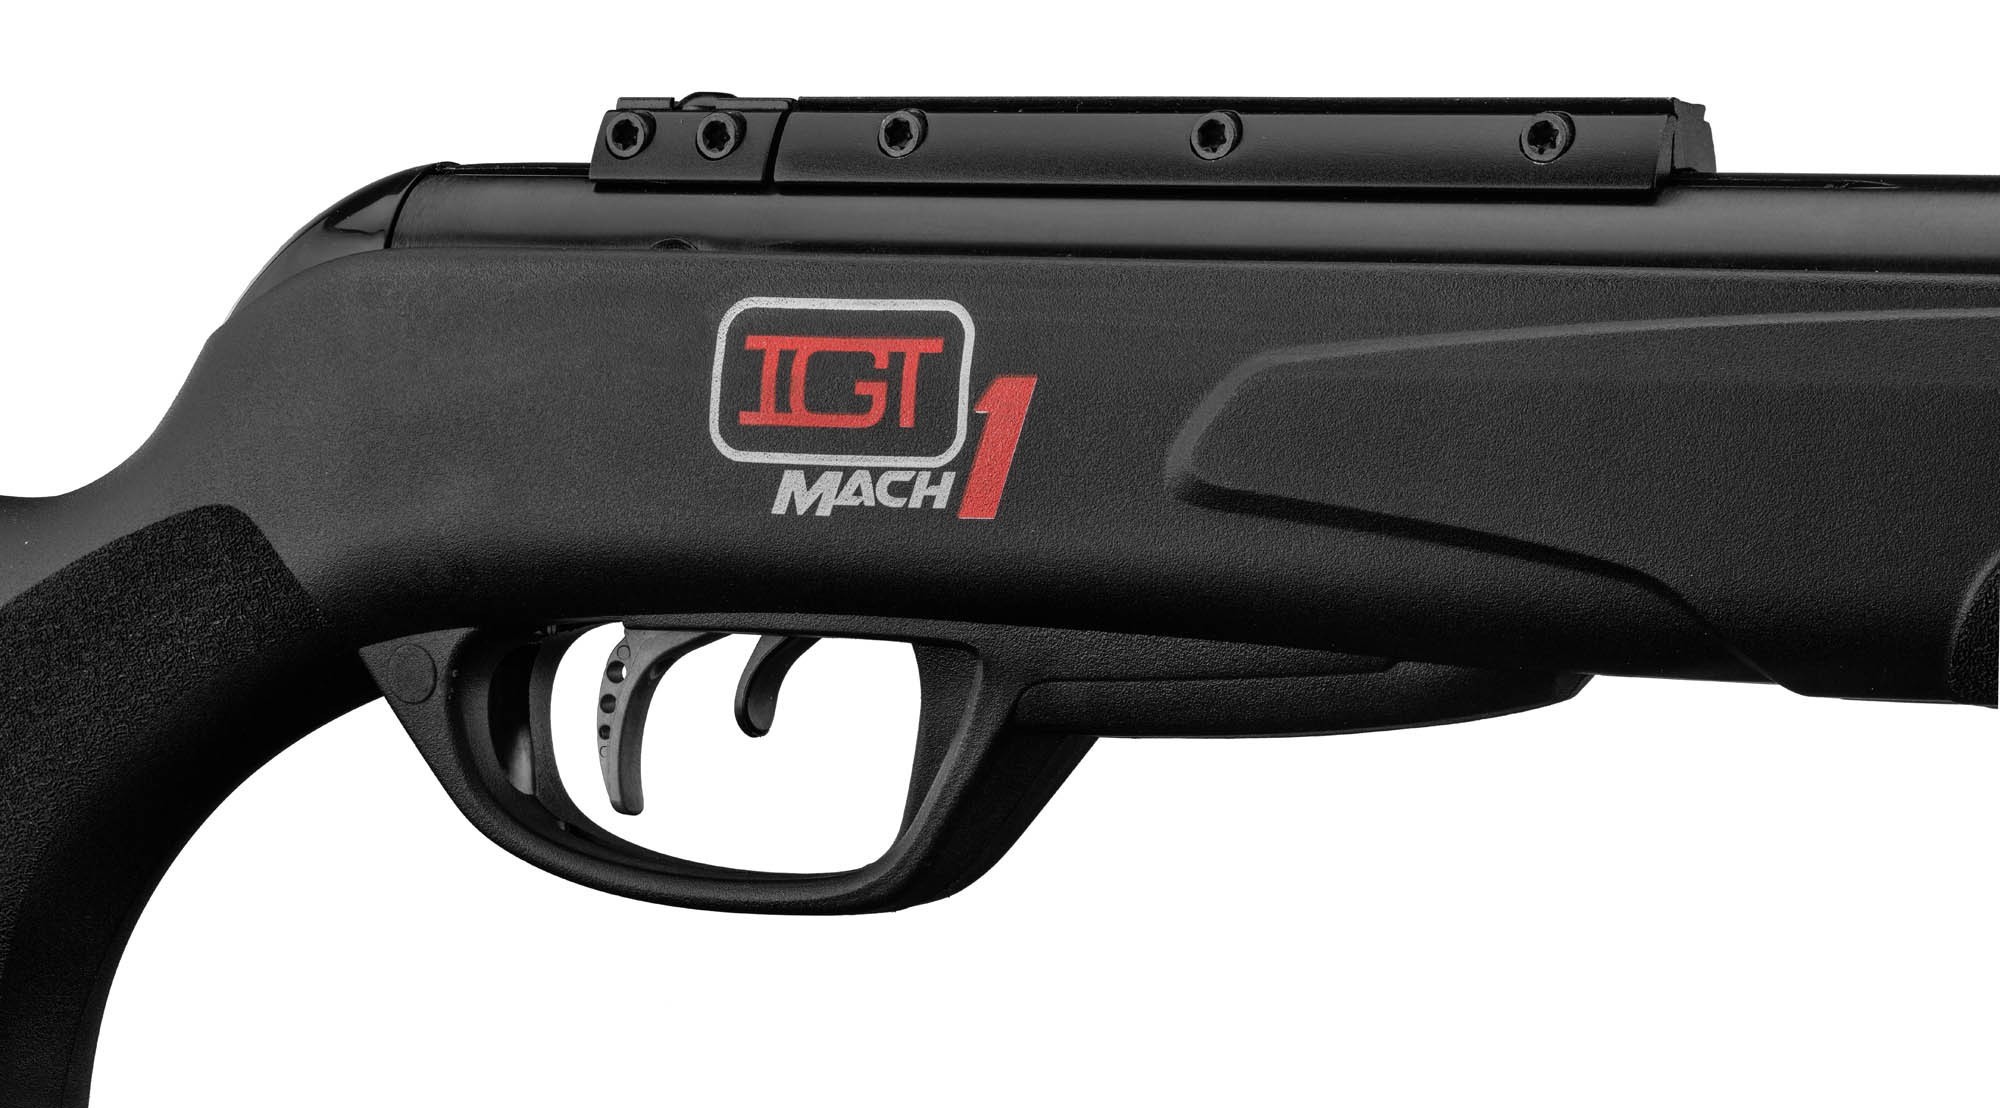 Rifle Gamo Black Maxxim IGT Mach 1